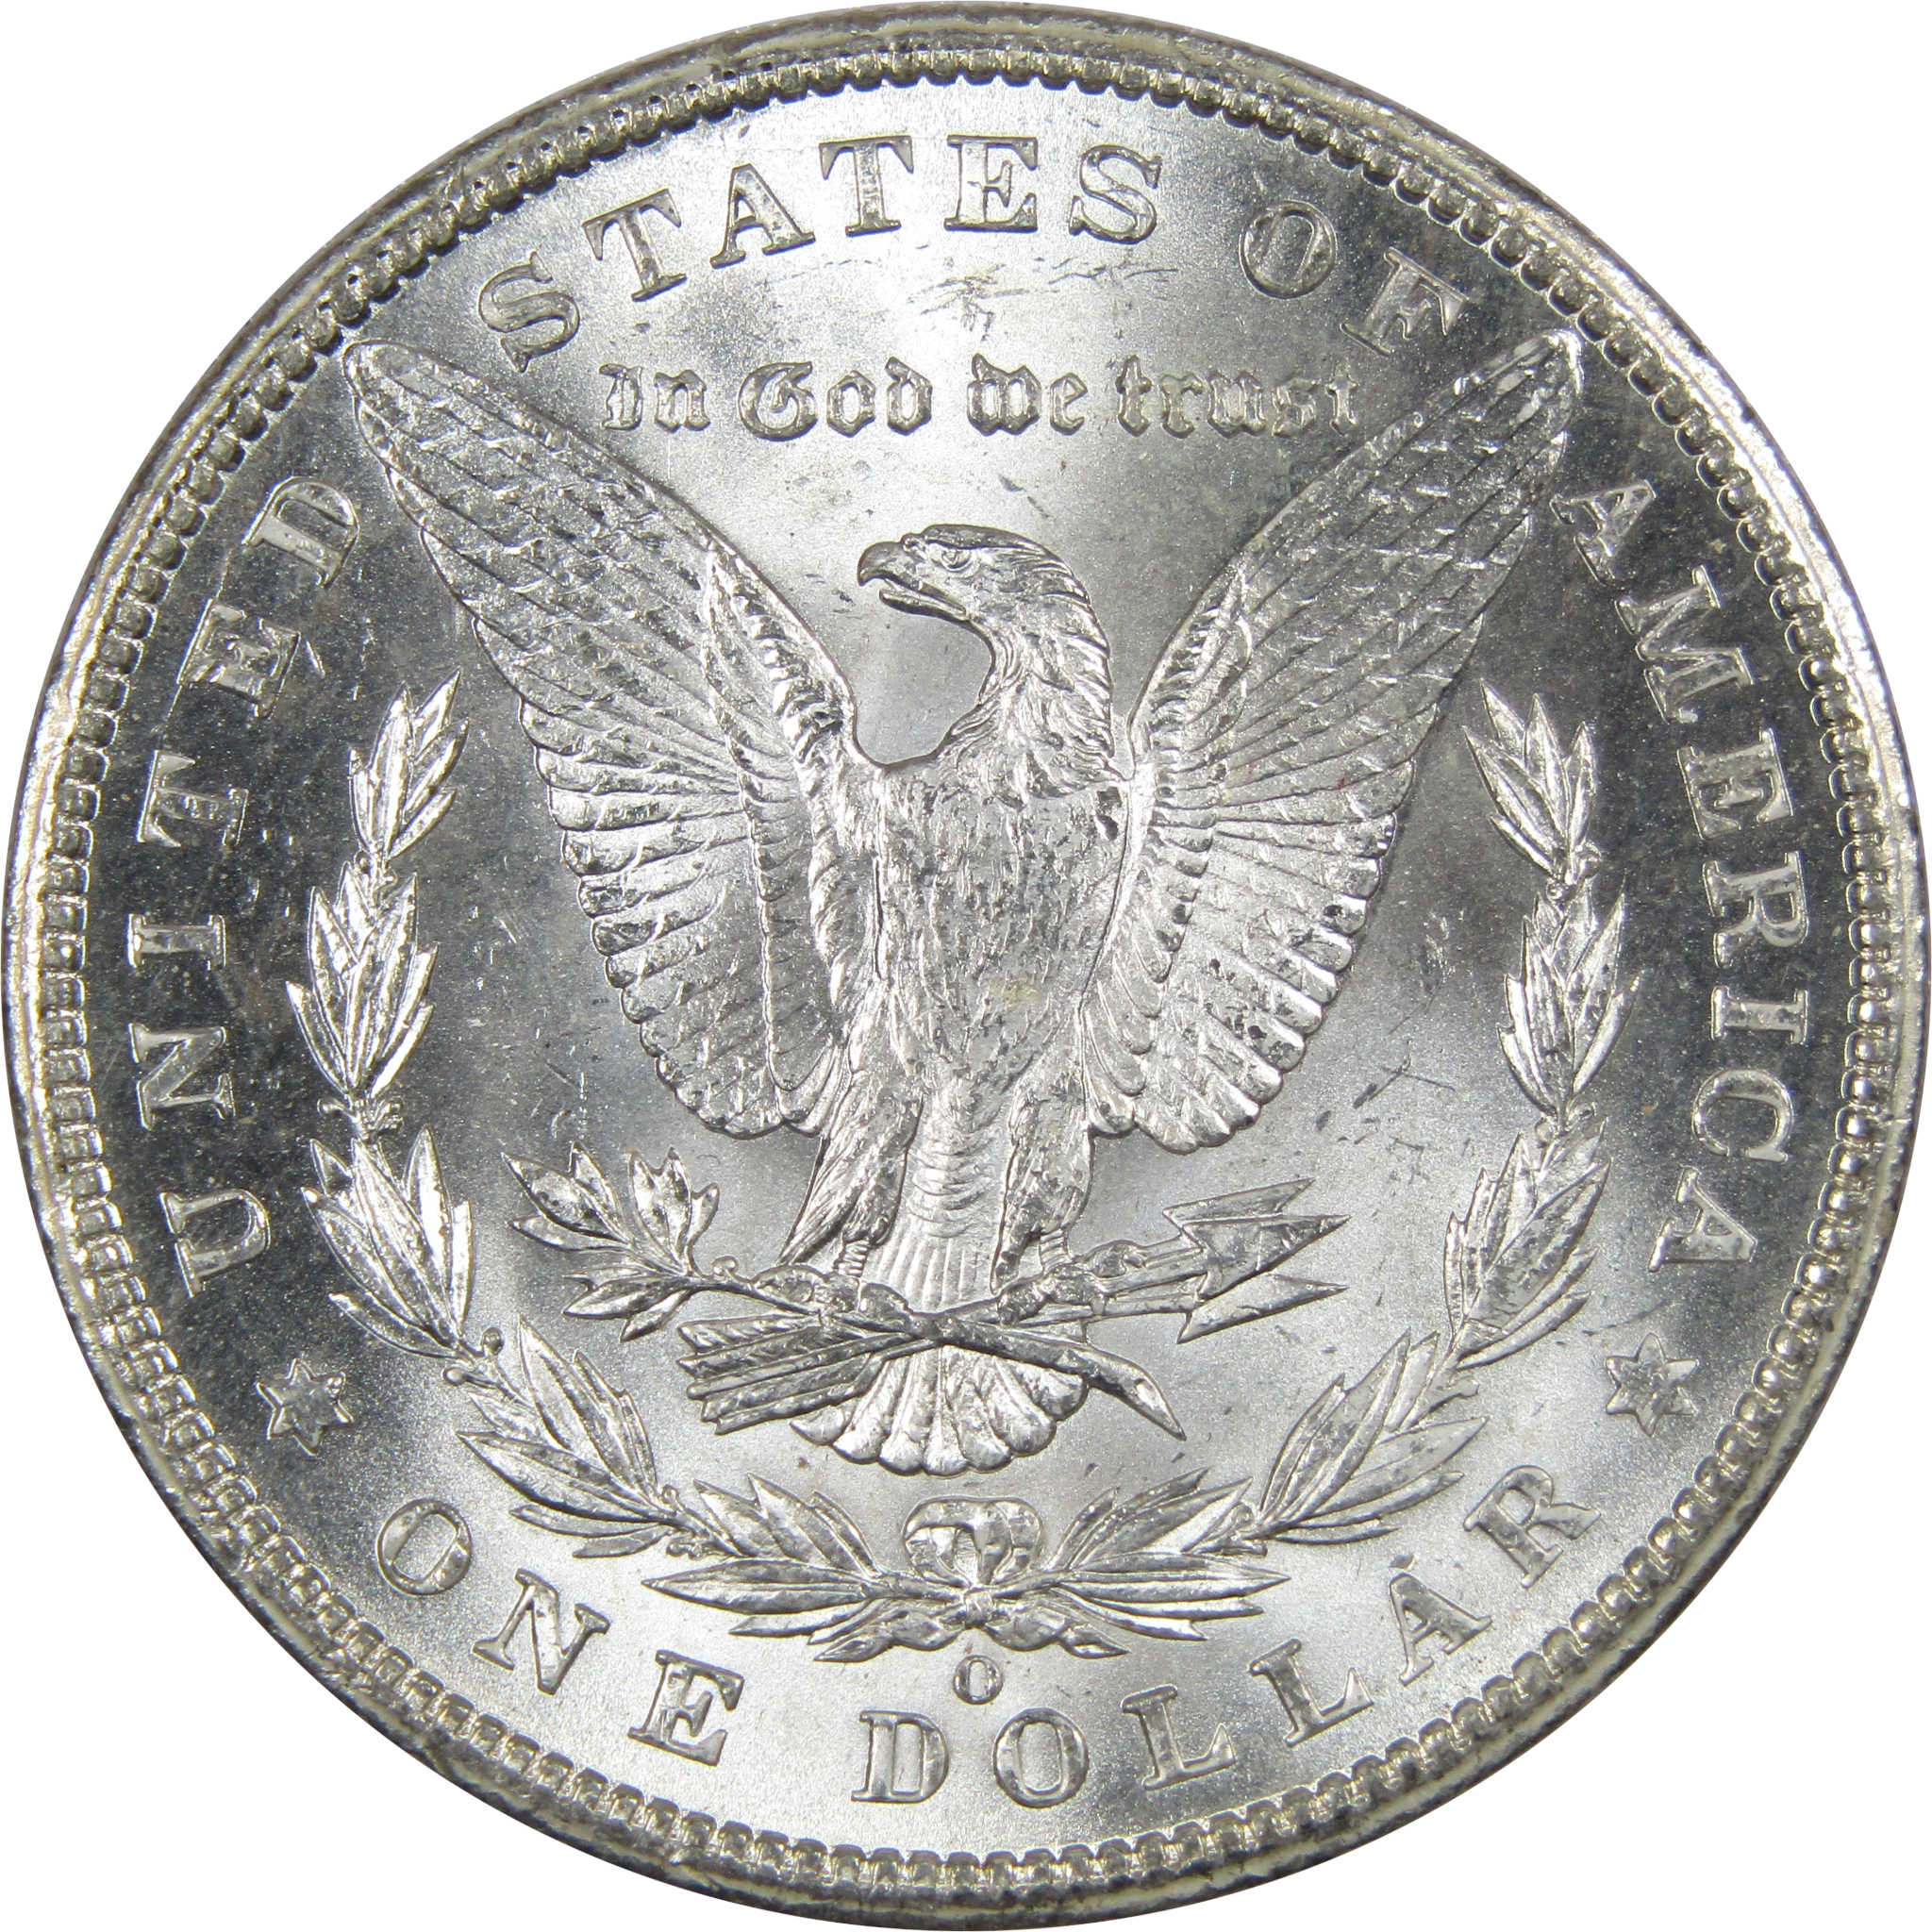 1900 O Morgan Dollar BU Uncirculated Mint State 90% Silver SKU:IPC9793 - Morgan coin - Morgan silver dollar - Morgan silver dollar for sale - Profile Coins &amp; Collectibles